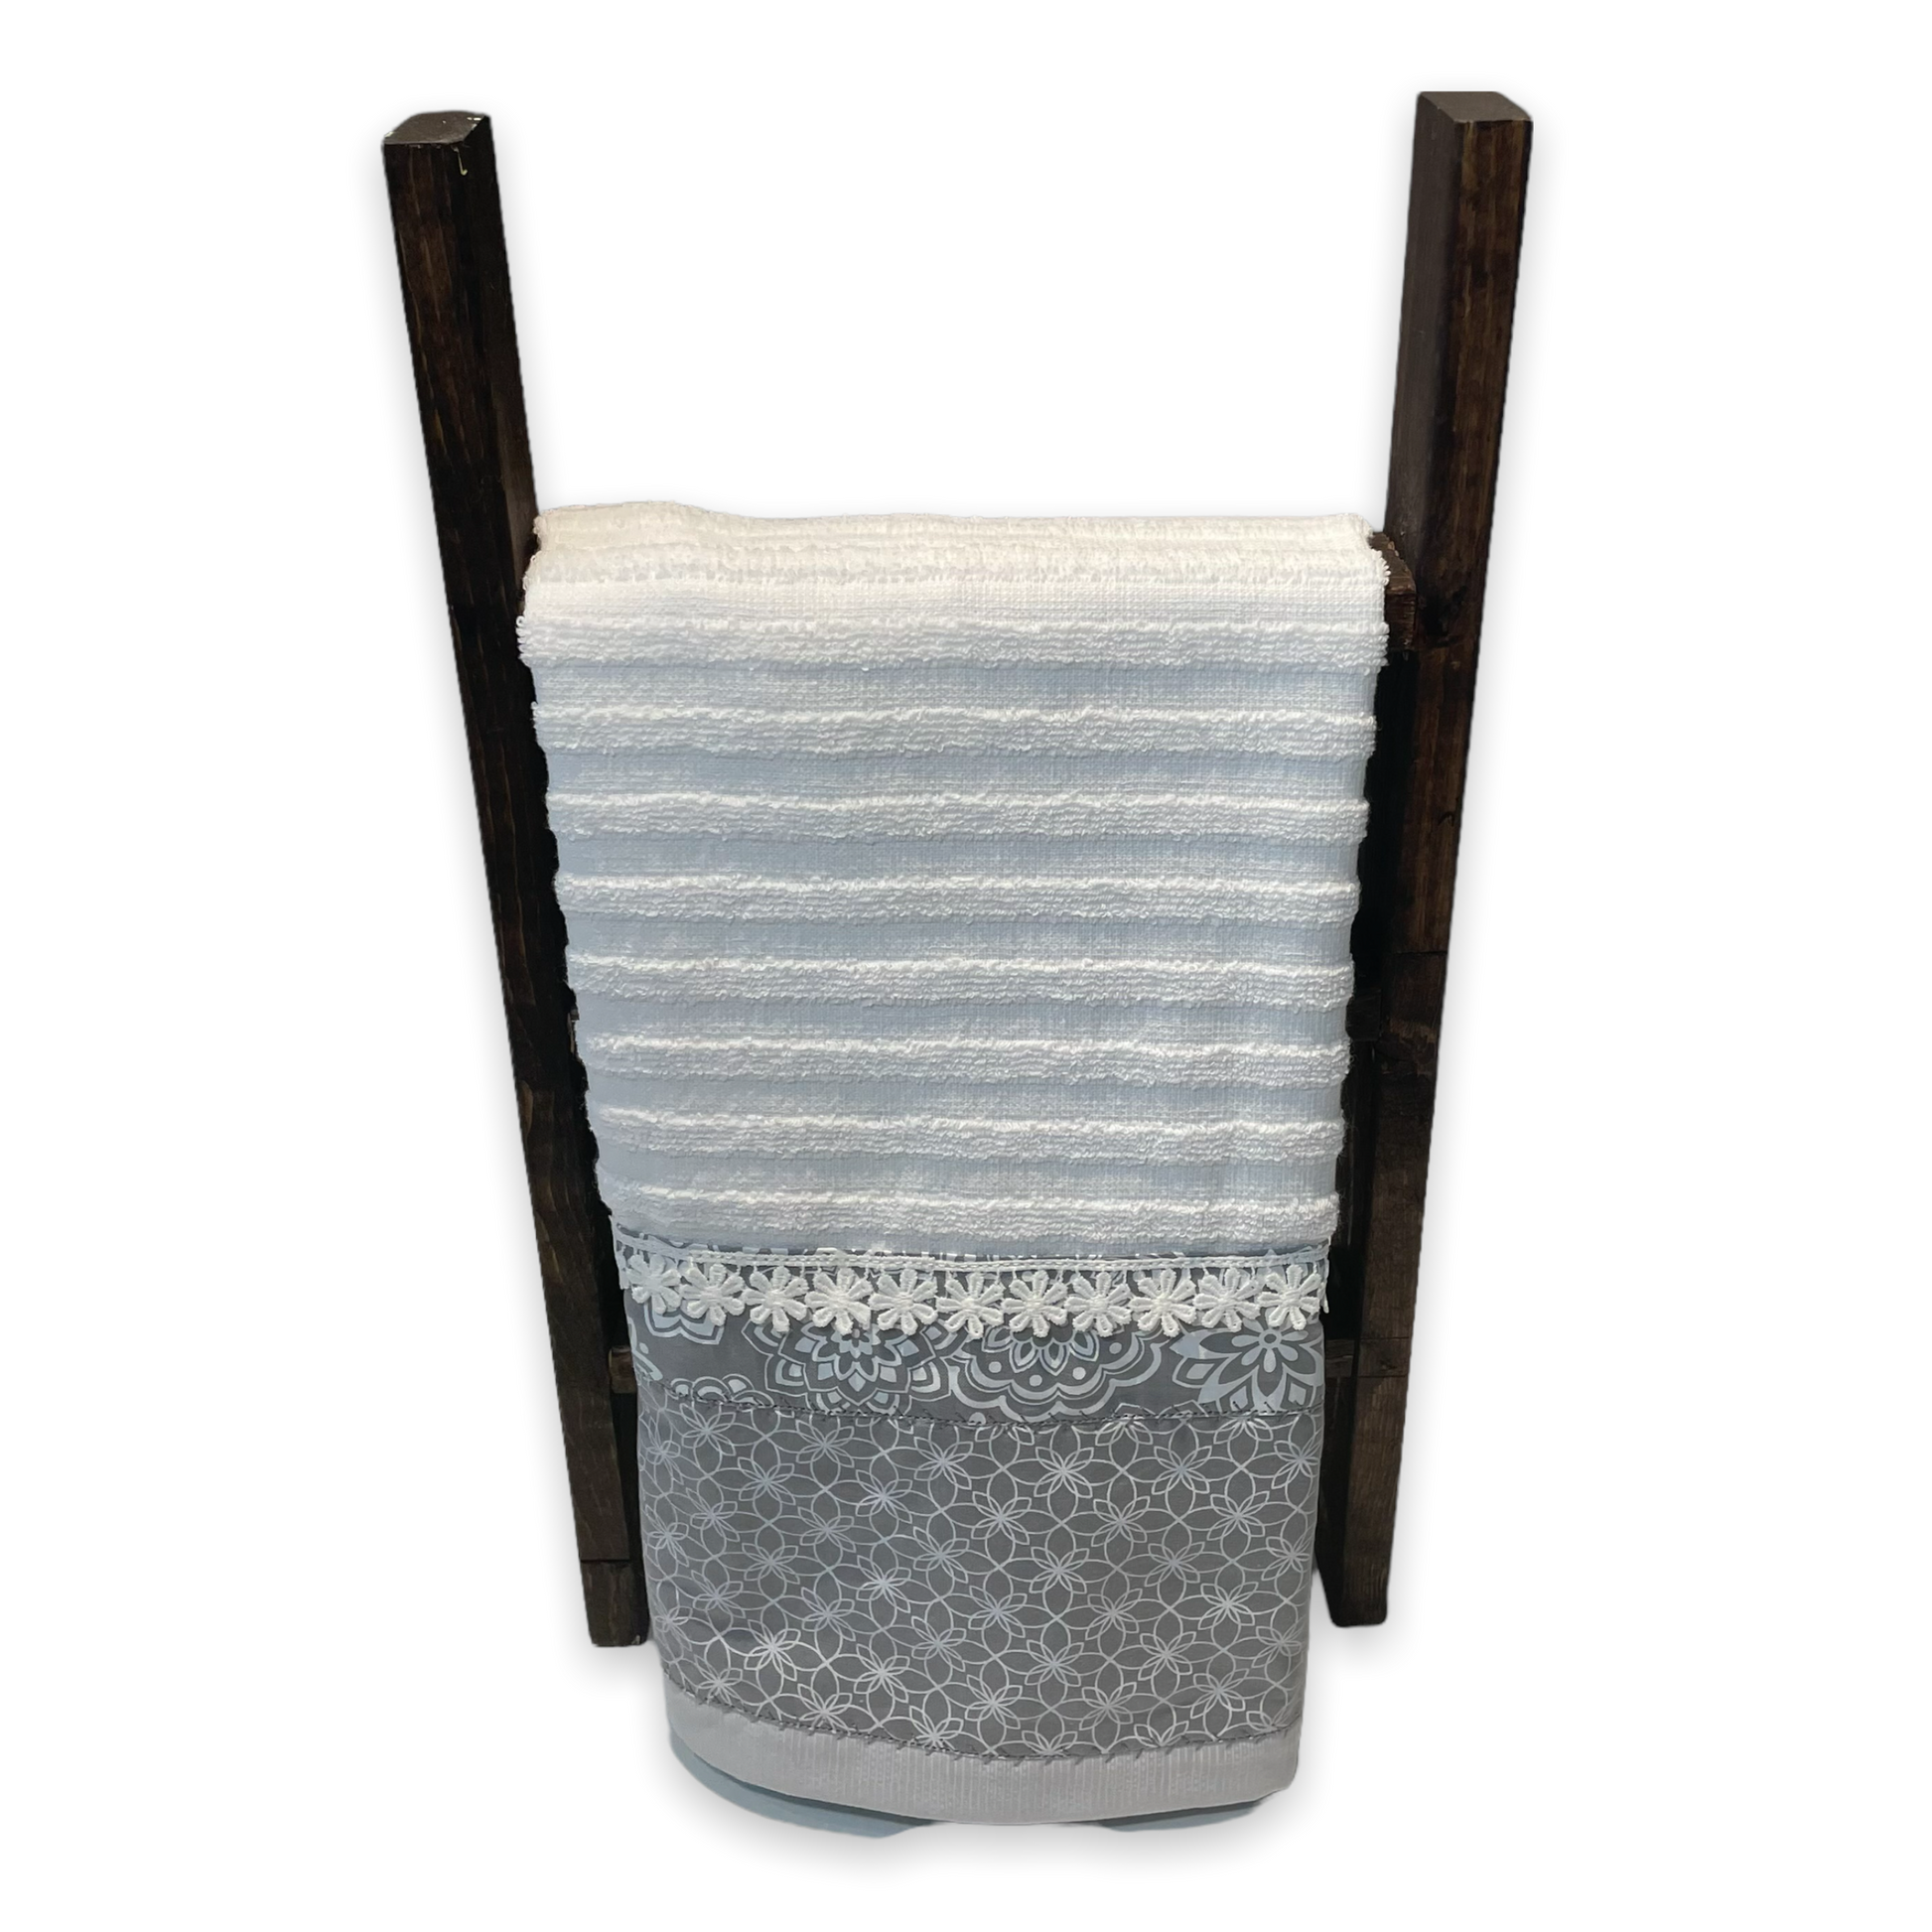 Grey and White Farmhouse Tea Towel. Decorative Dish Towel - Home Stitchery Decor